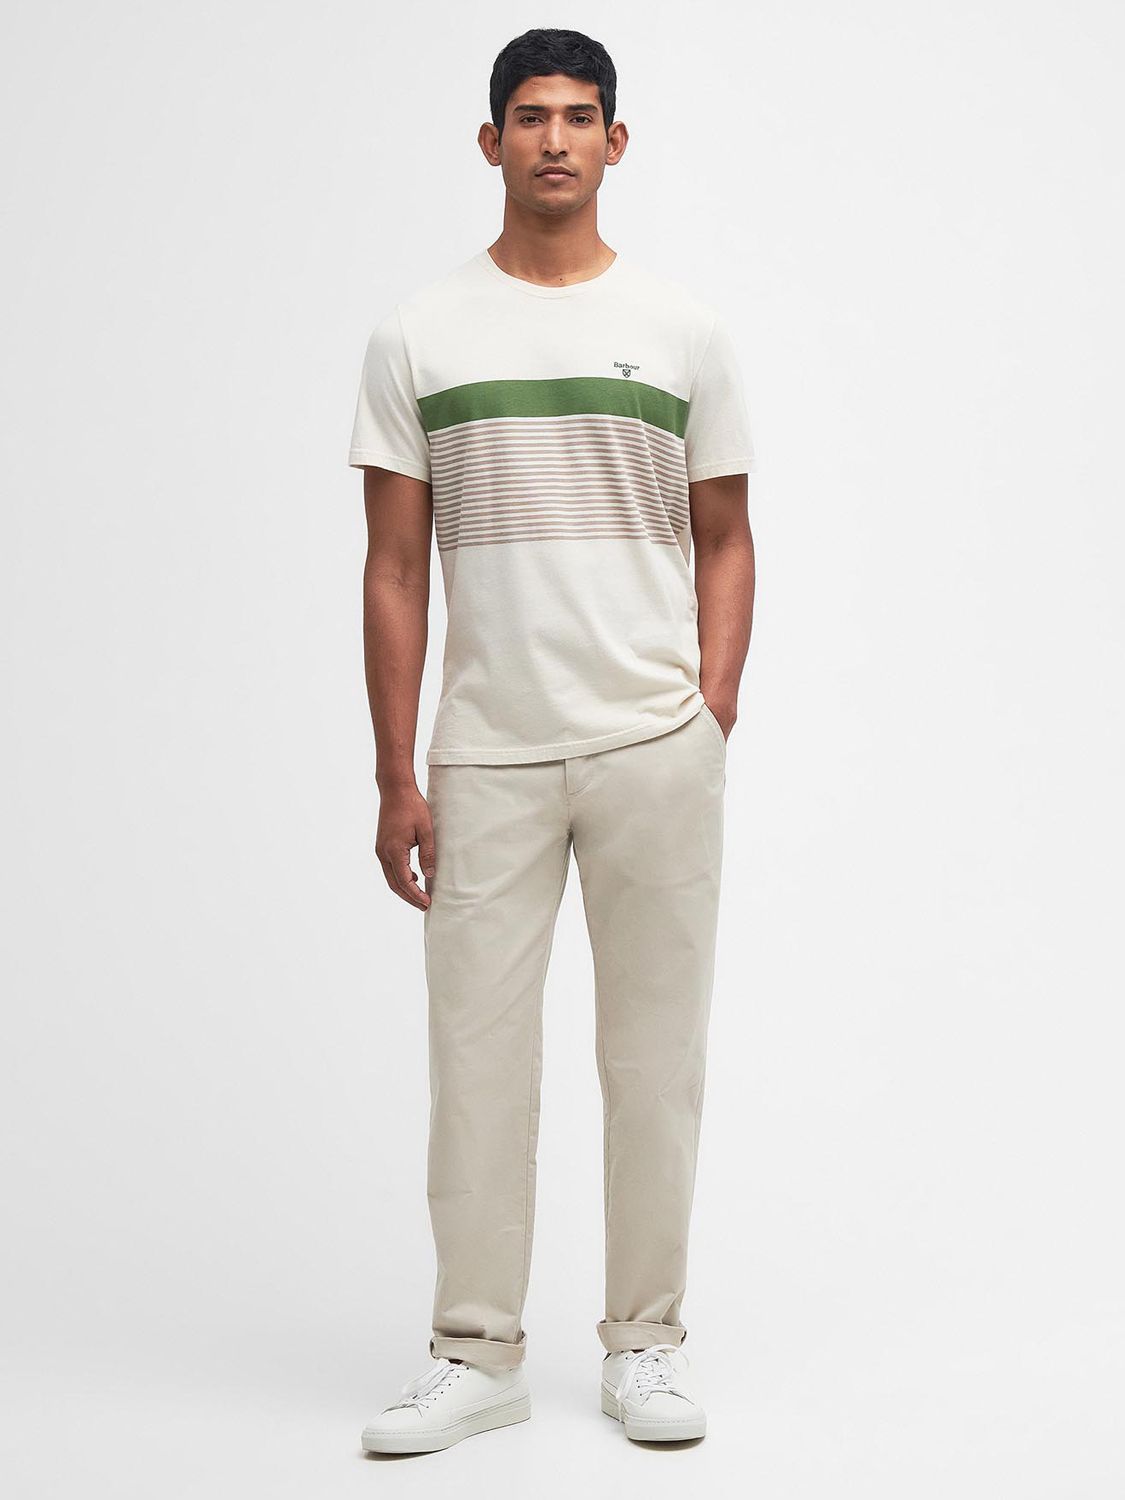 Barbour Braeside Stripe T-Shirt, Grey/Multi, S